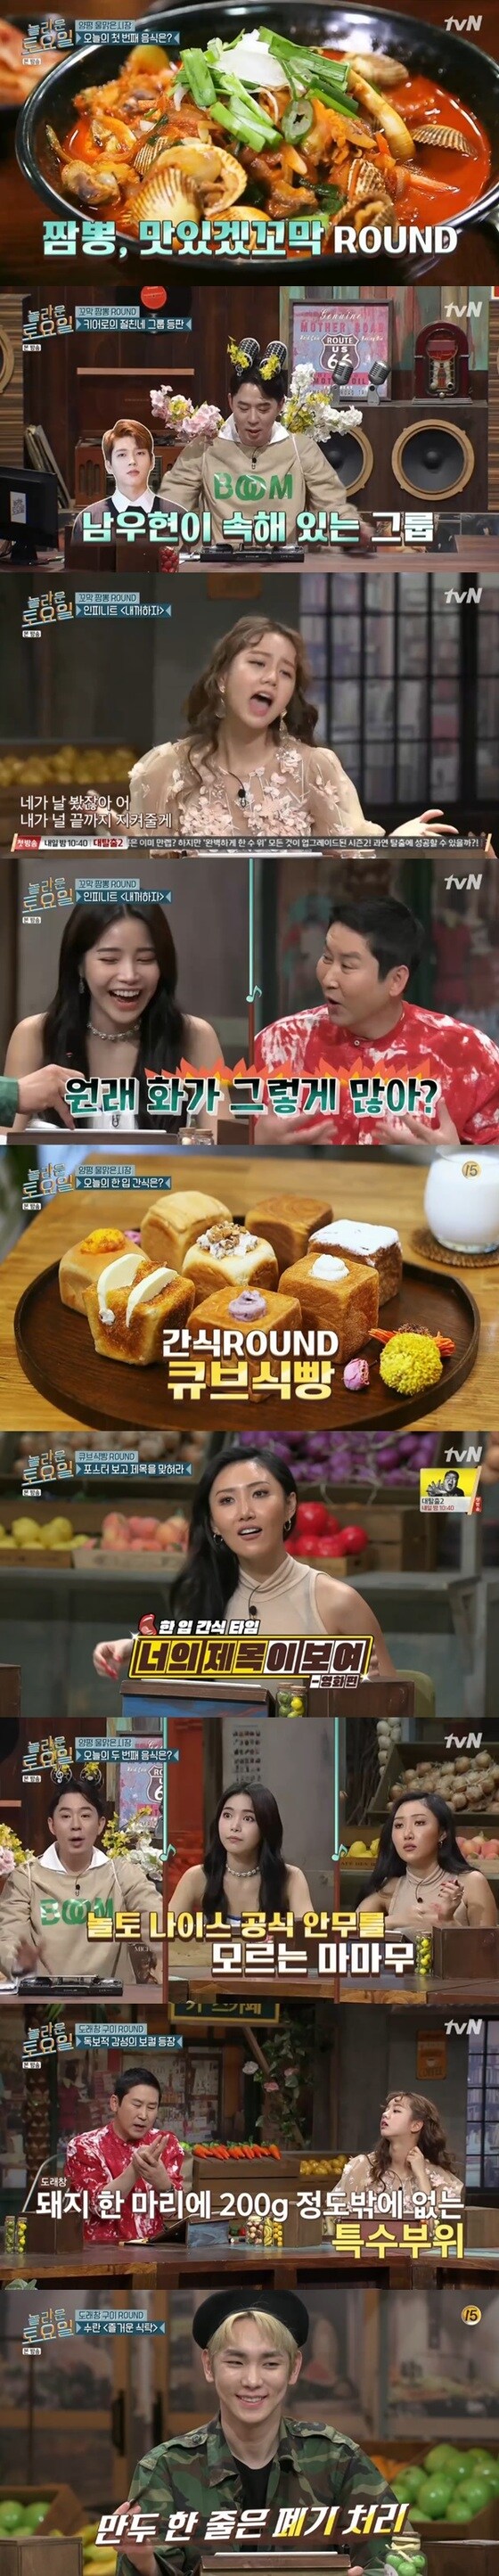 tvN '놀라운 토요일' 방송 화면 캡처© 뉴스1